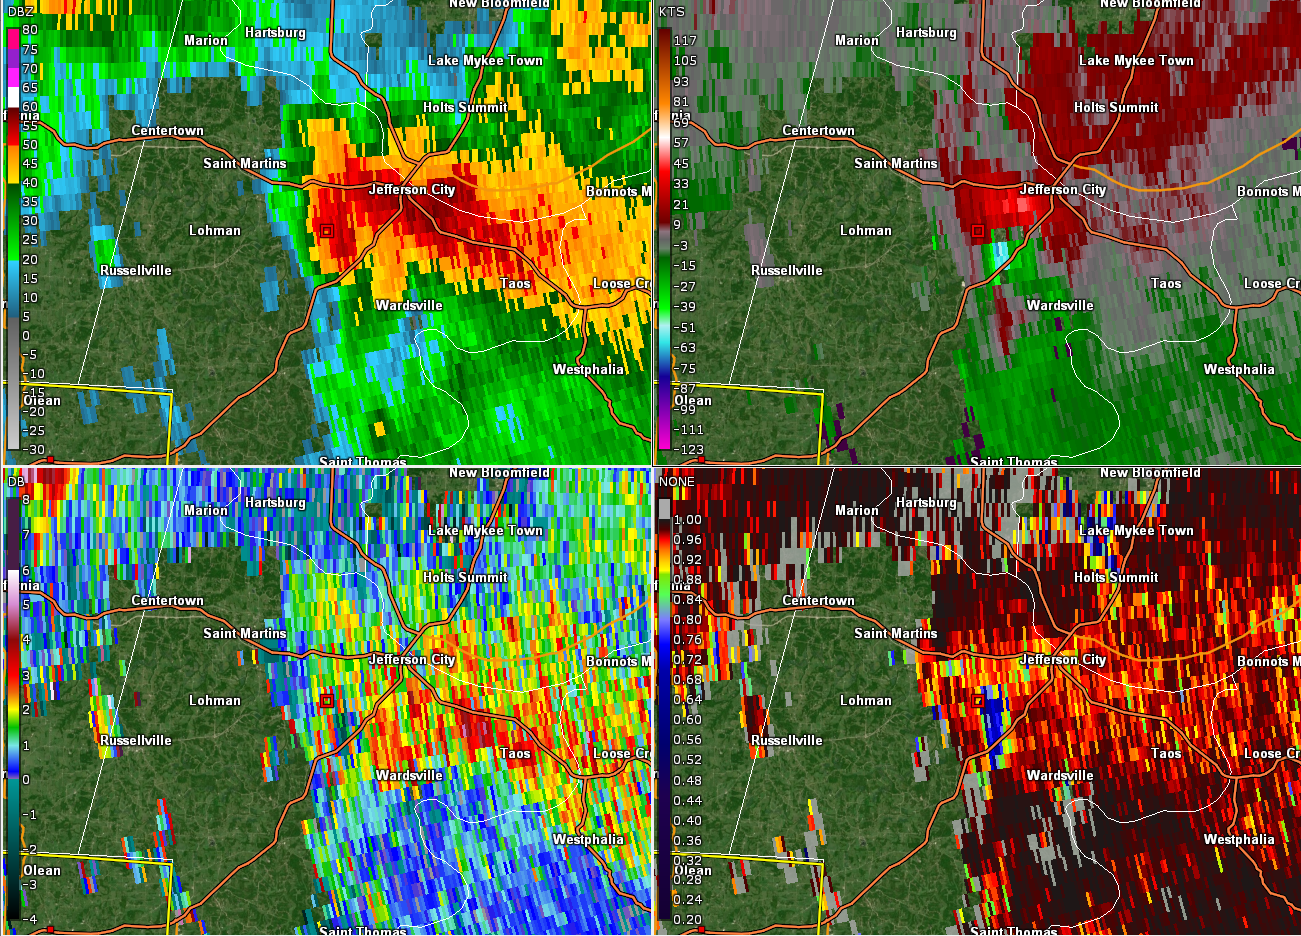 Radar four panel of tornado as it moved into Jefferson City.